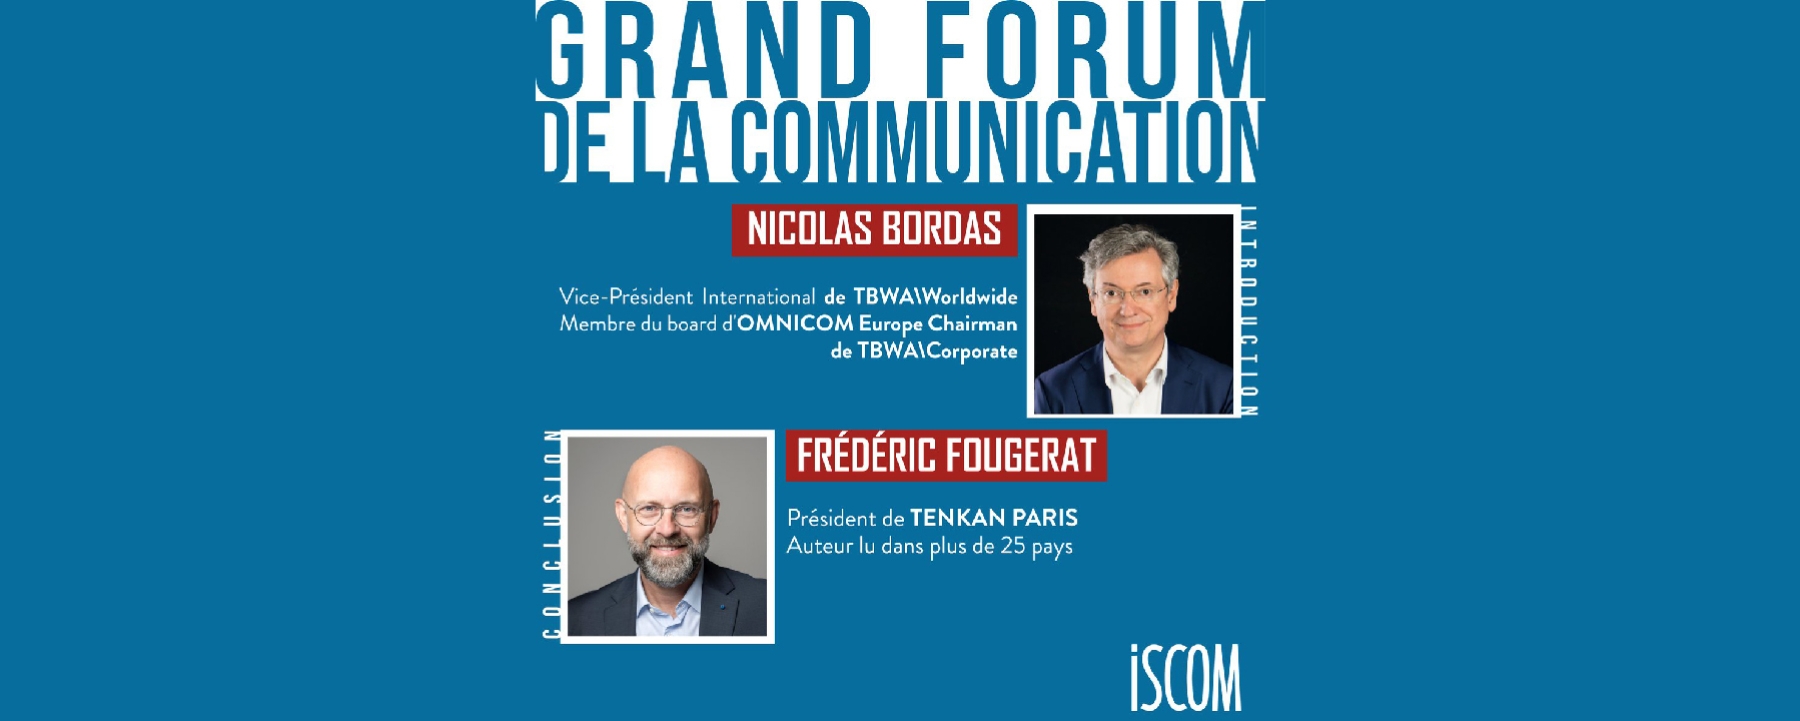 Grand Forum de la Communication ISCOM